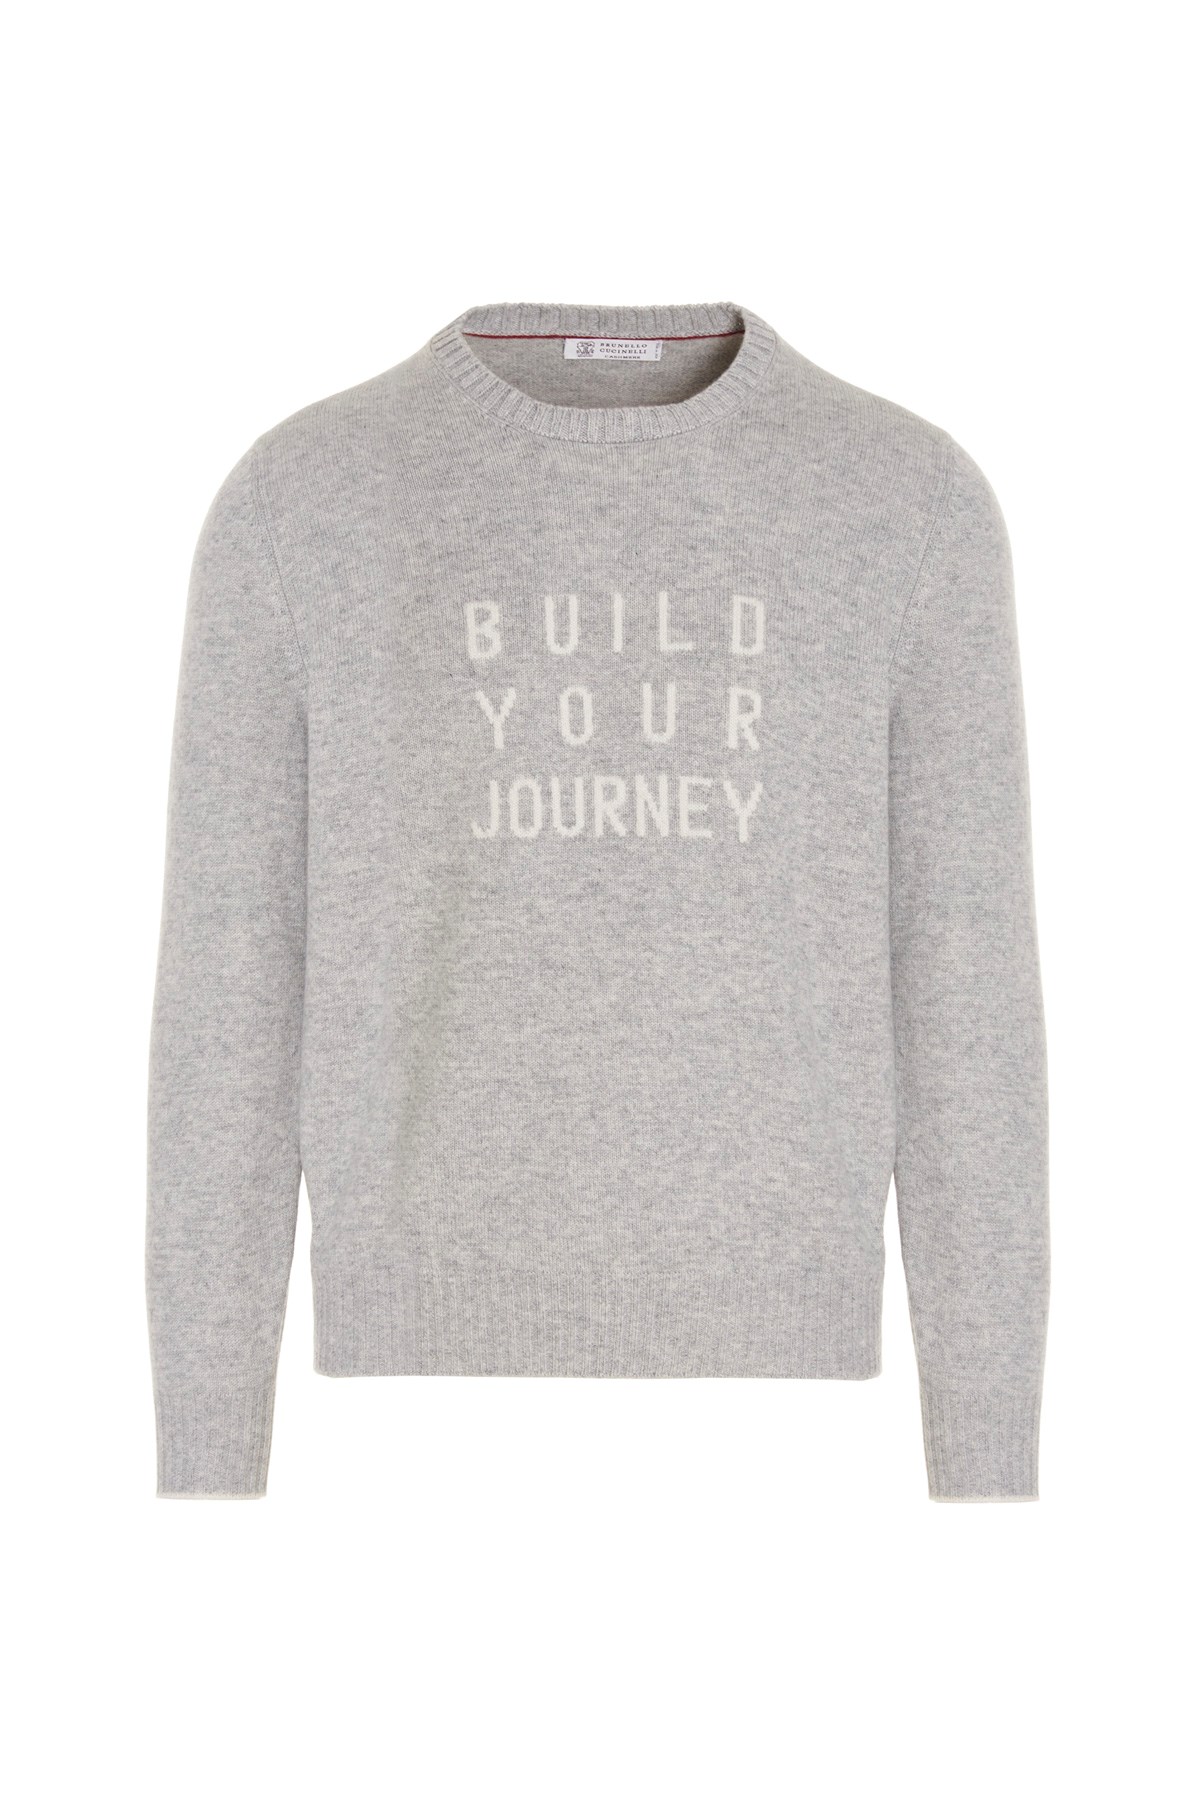 BRUNELLO CUCINELLI 'Build Your Journey' Sweater